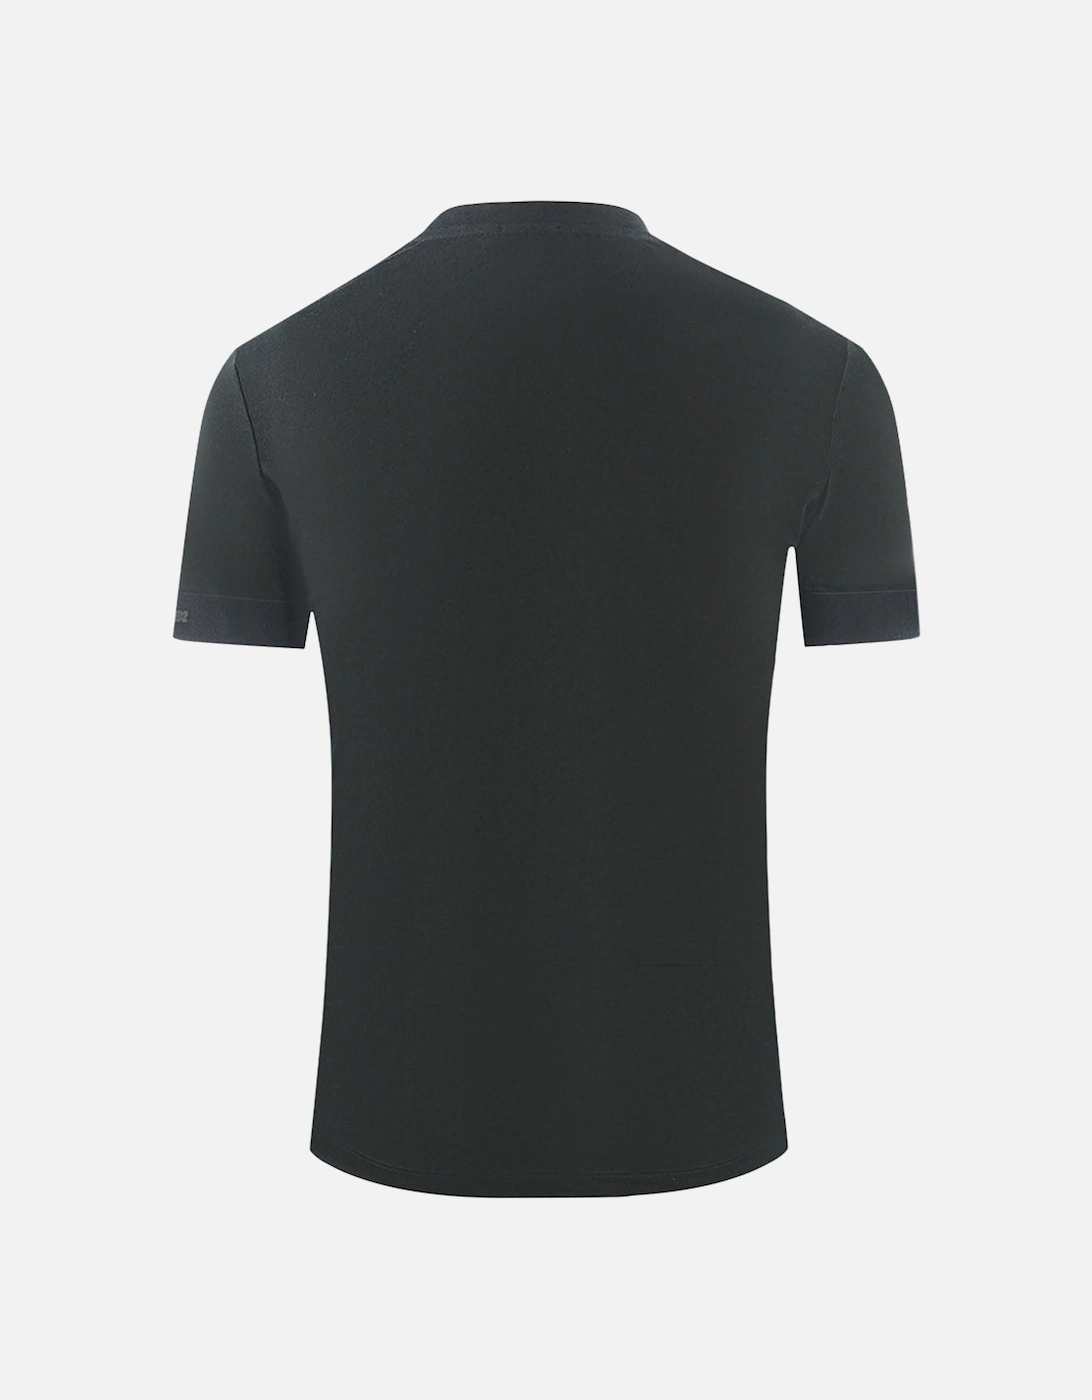 Bold Brand Logo on Sleeve Black Underwear T-Shirt